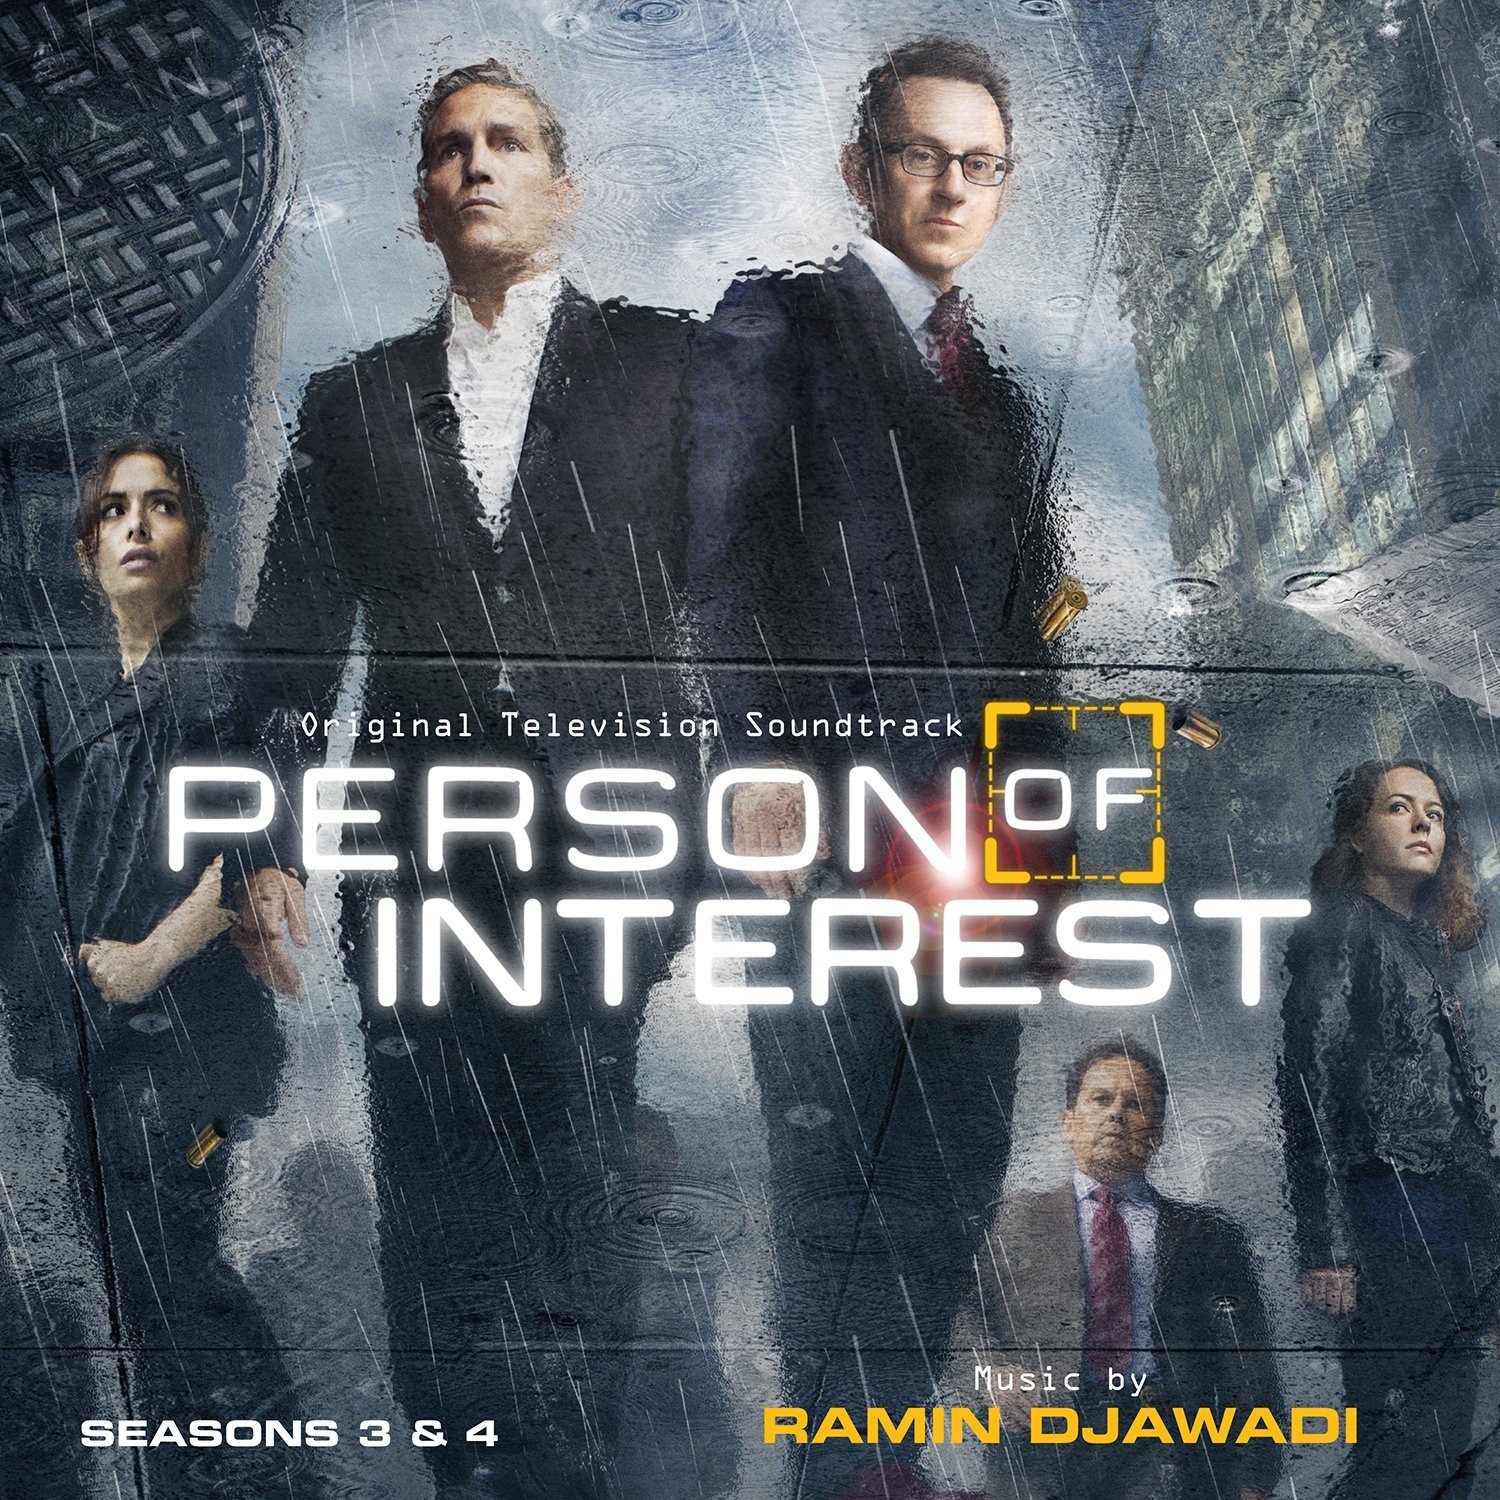 Person of Interest Seasons 3&4